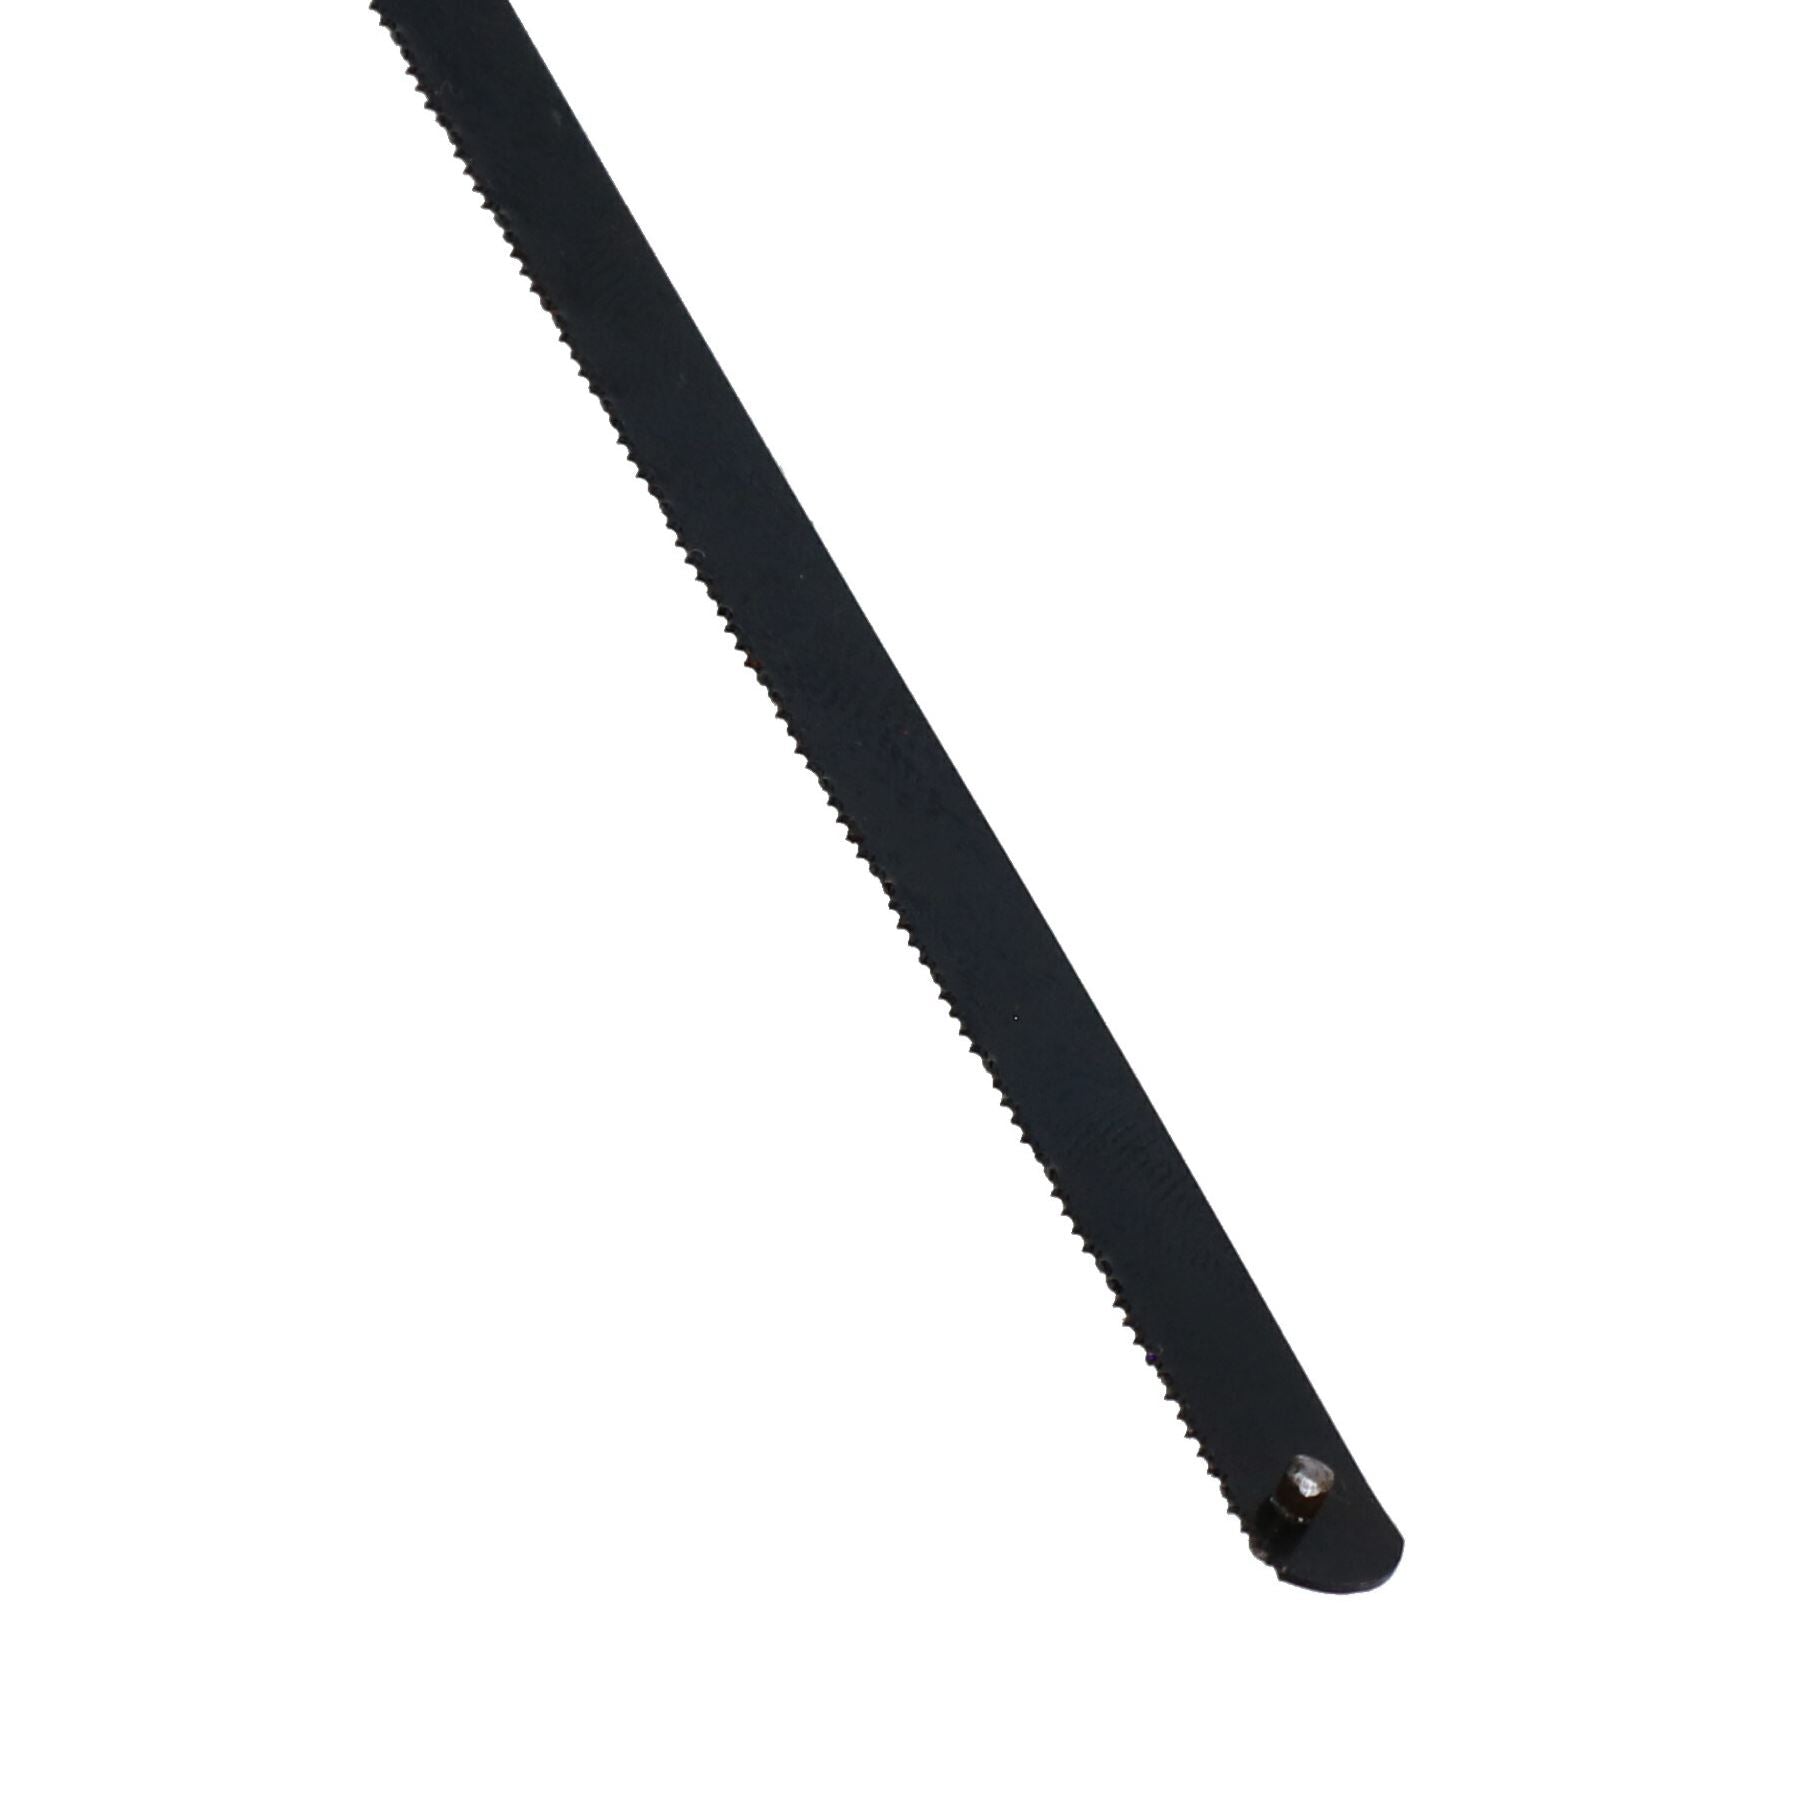 Junior Hacksaw Blades 6" / 150mm Length for Metal Cutting 24 TPI